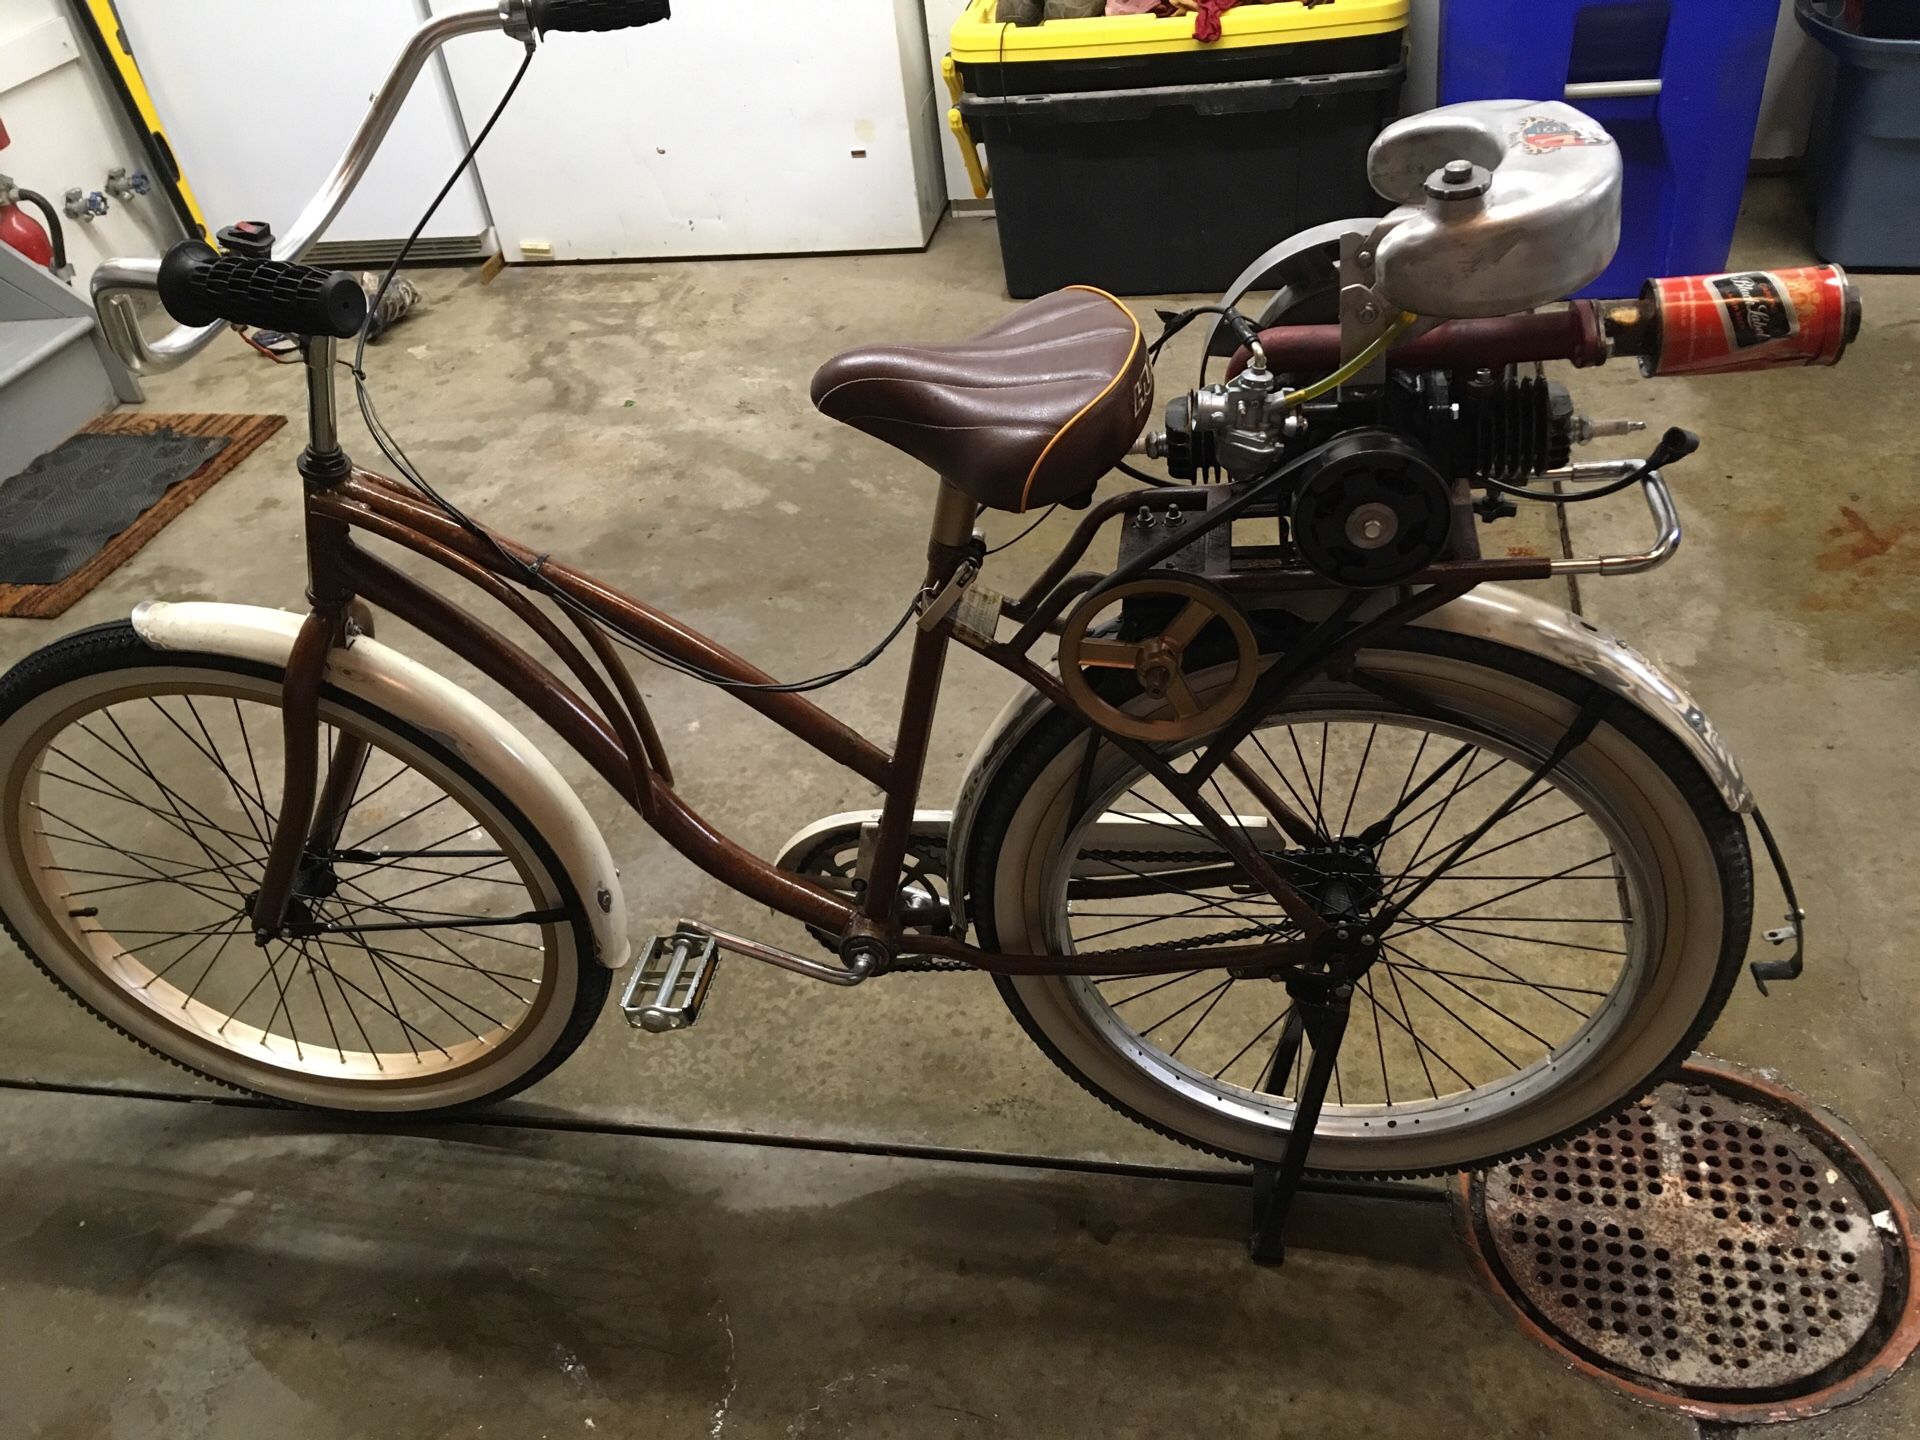 Vintage looking bike with 1940s gas powered Maytag motor